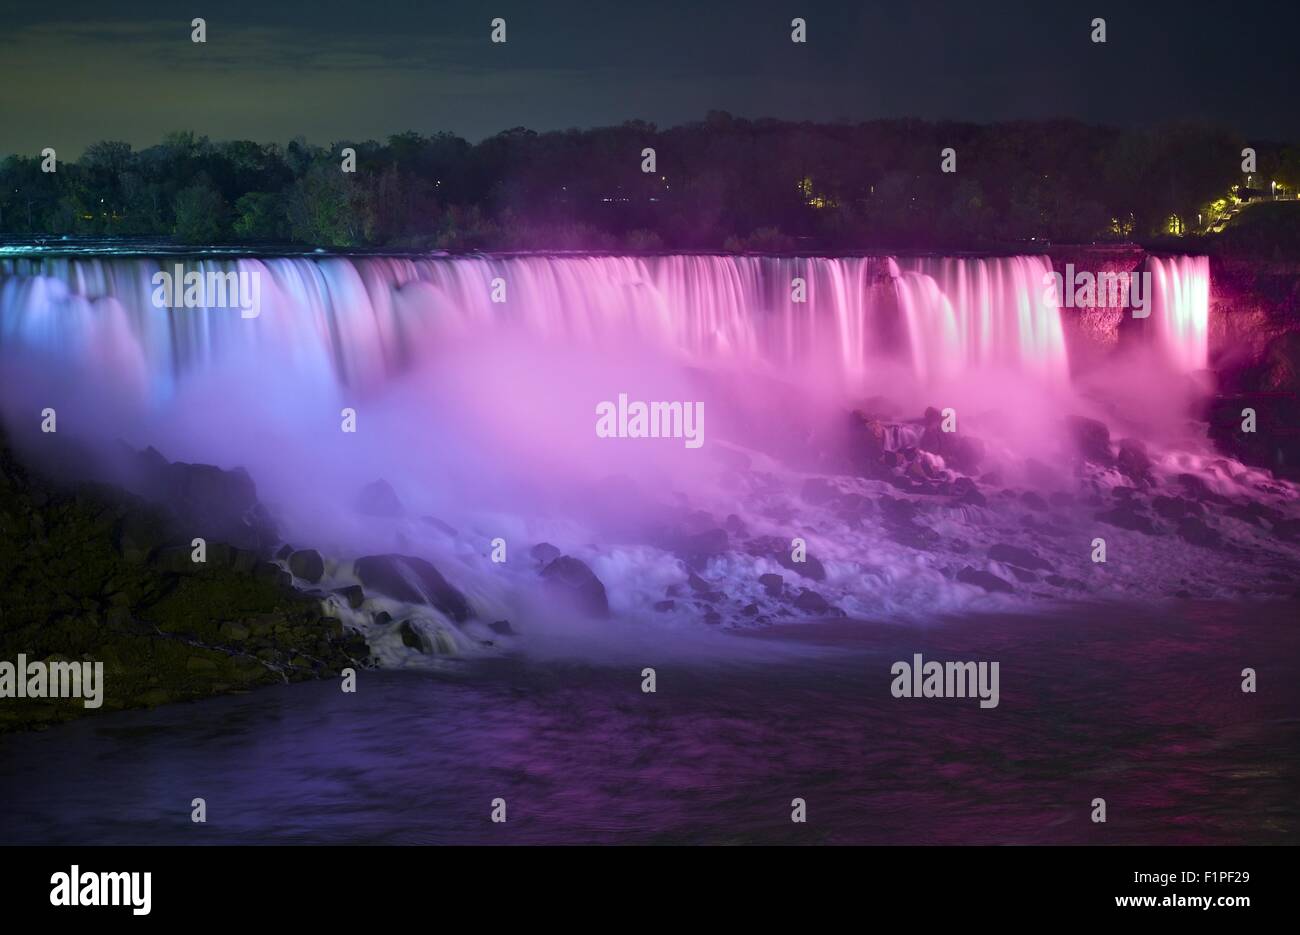 Wallpaper  3008x1780 px Niagara Falls night rainbows water waterfall  3008x1780  4kWallpaper  1309539  HD Wallpapers  WallHere